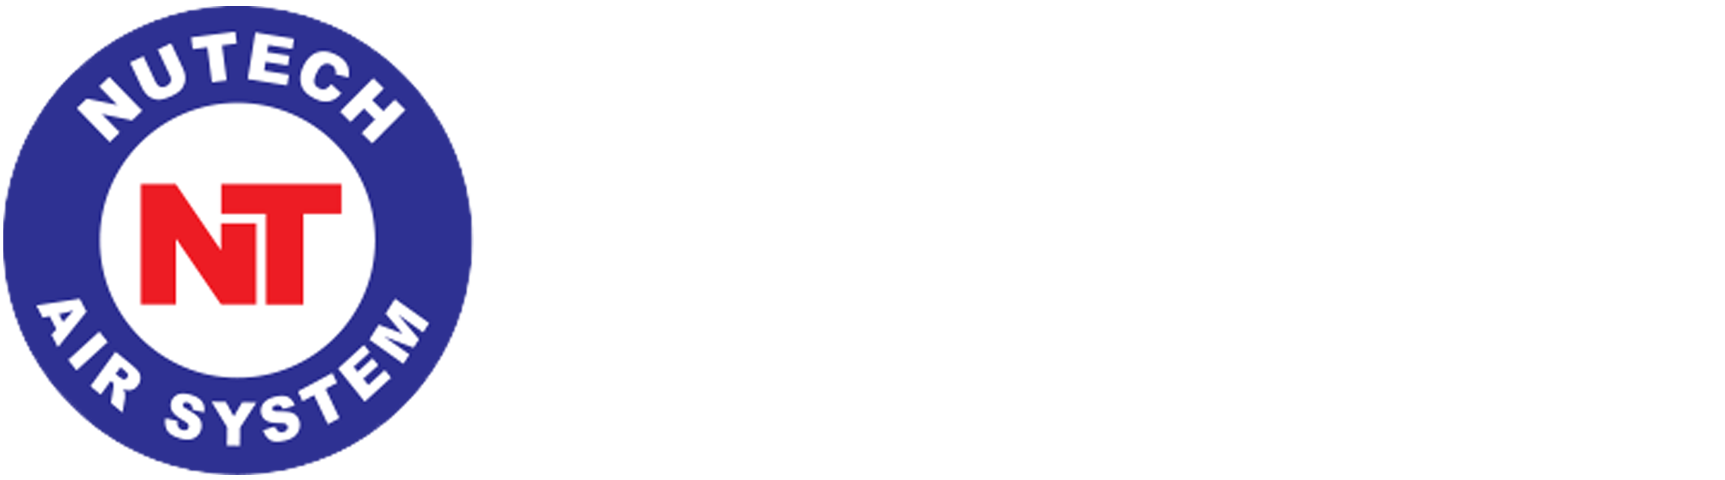 Nutech Air System Logo